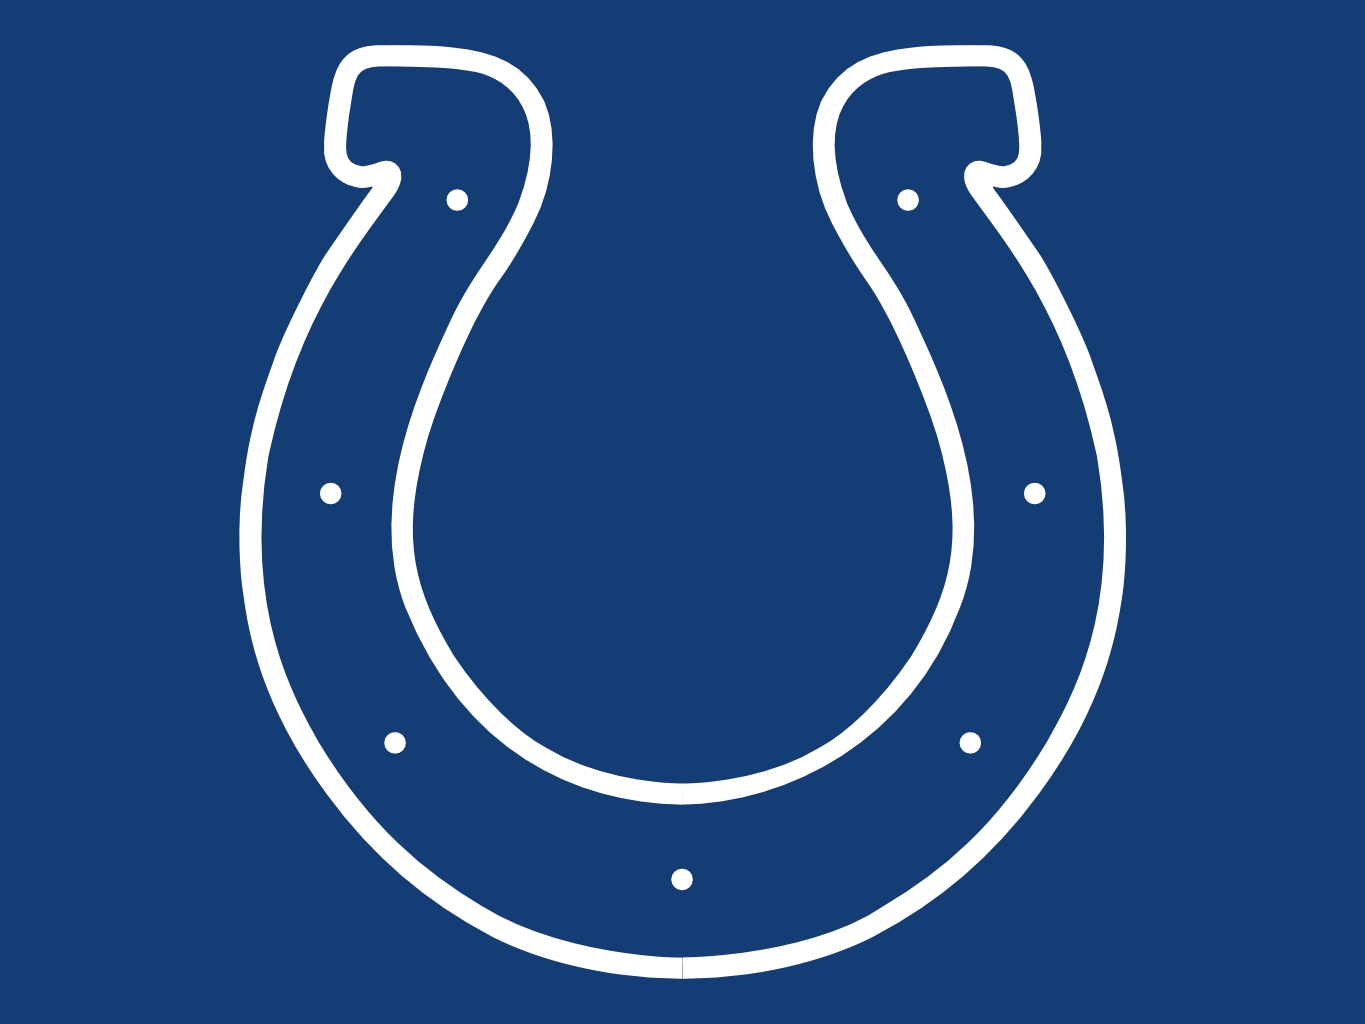 willis lingo: The Colts